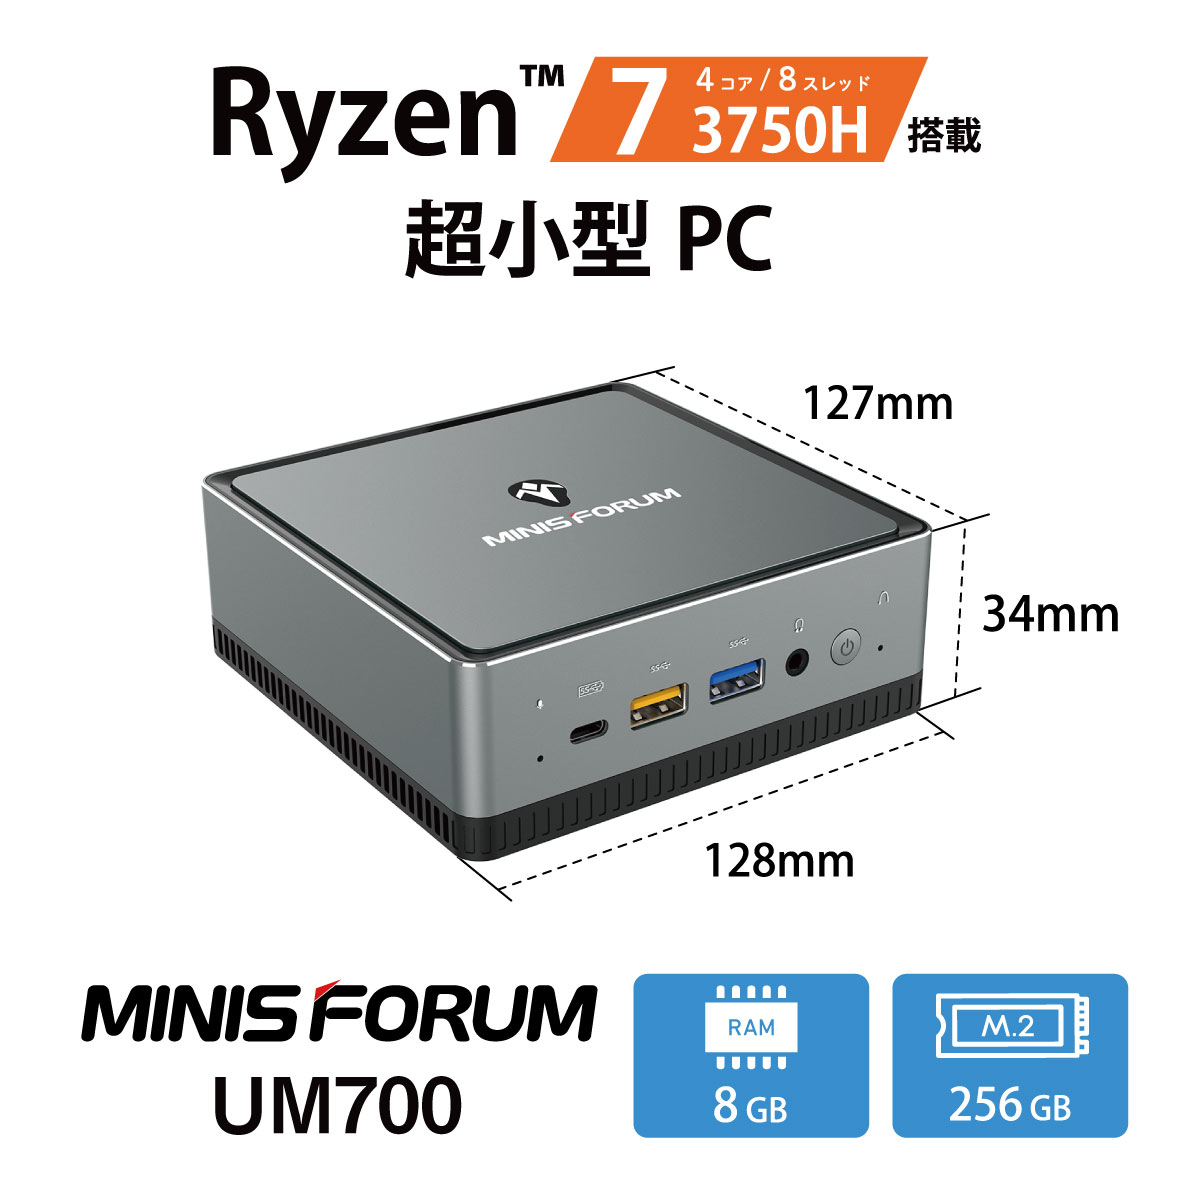 MINISFORUM MINISFORUM DeskMini UM700 Mini PC AMD Ryzen 7 3750H